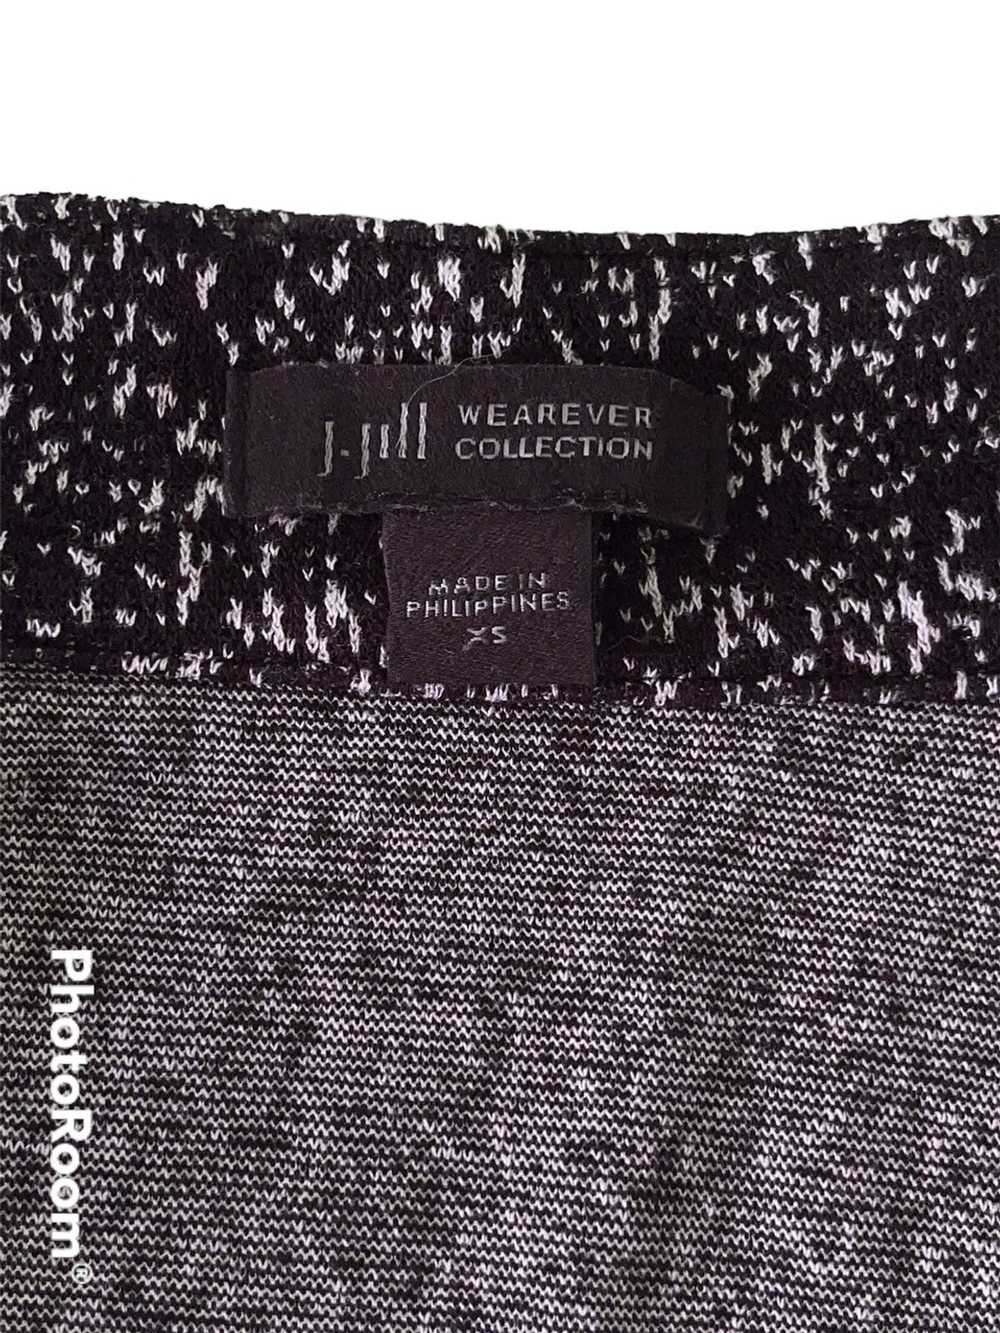 J// J.Jill Wearever Collection Black Cardigan XS - image 2